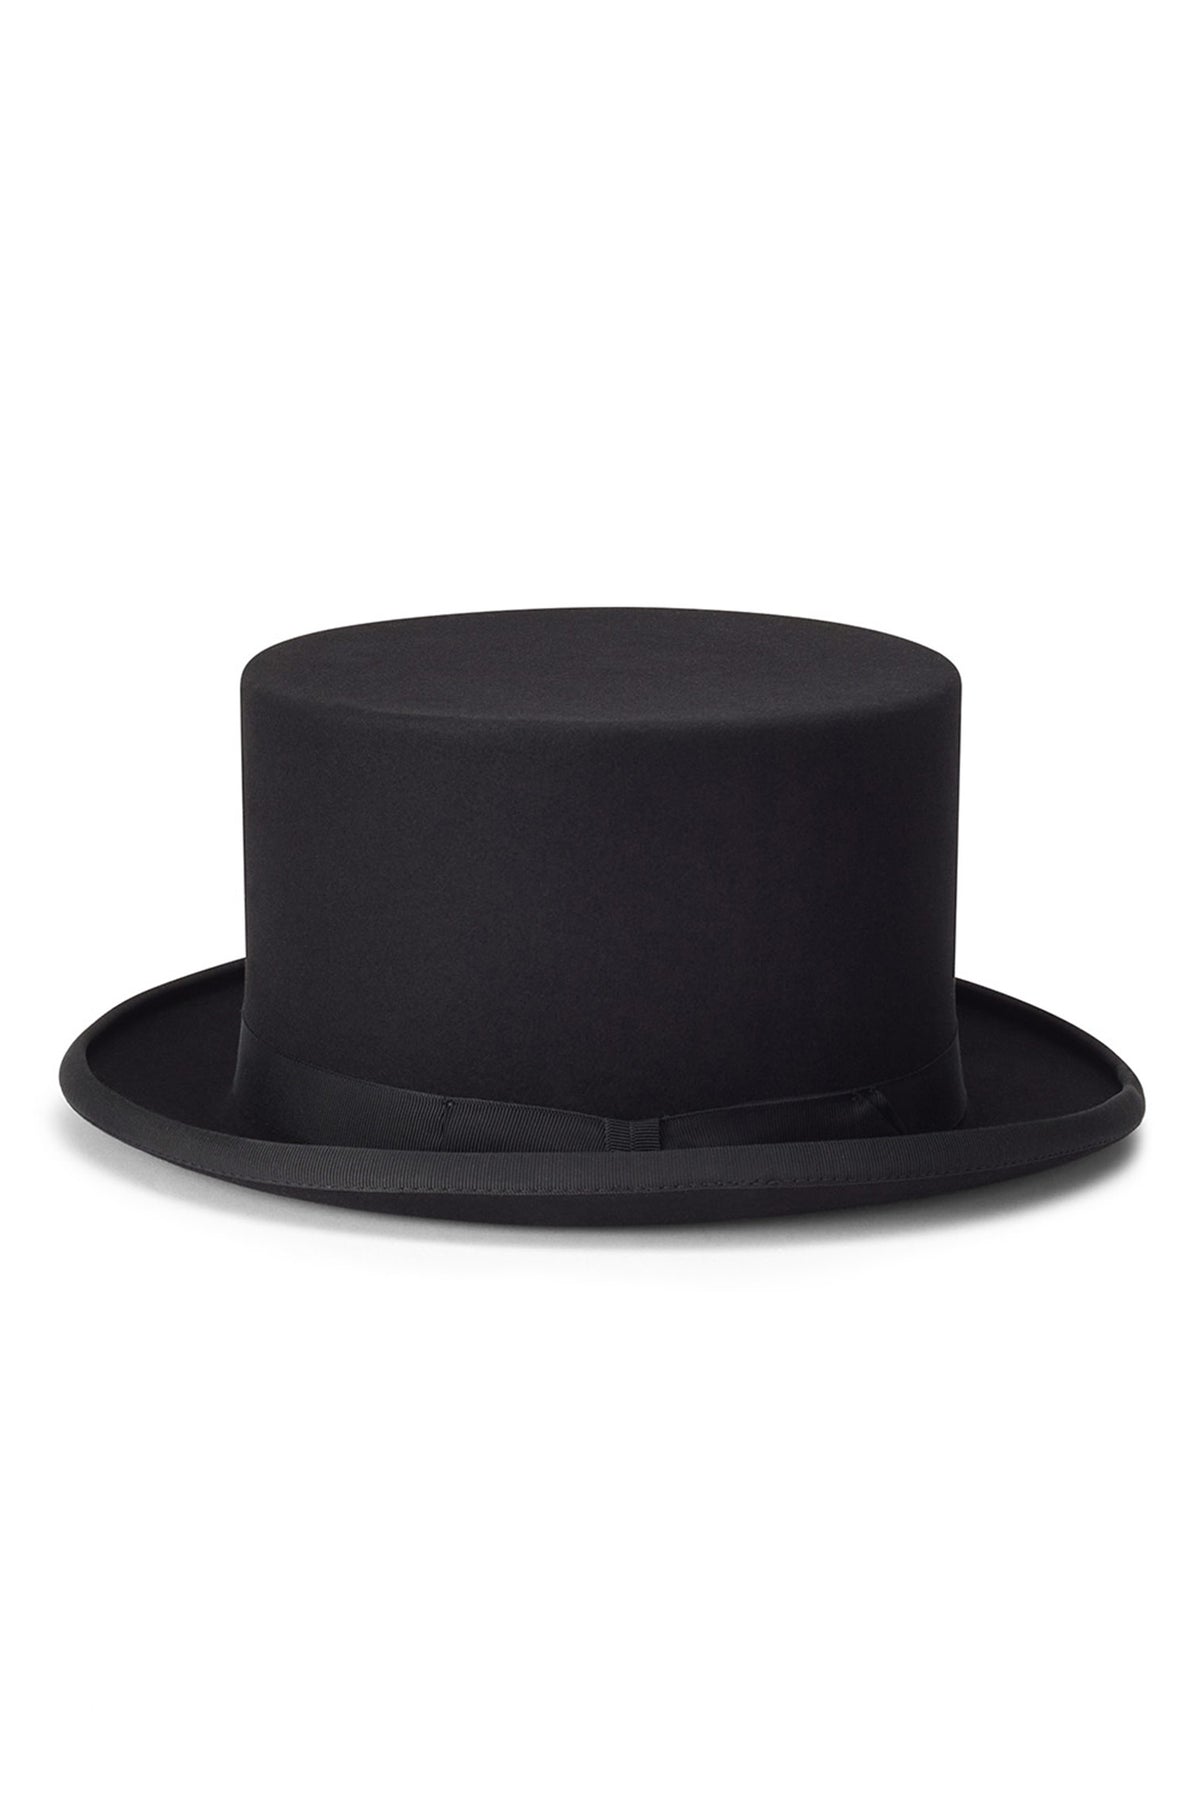 The Oddjob Hat, James Bond Hat - Lock & Co. UK